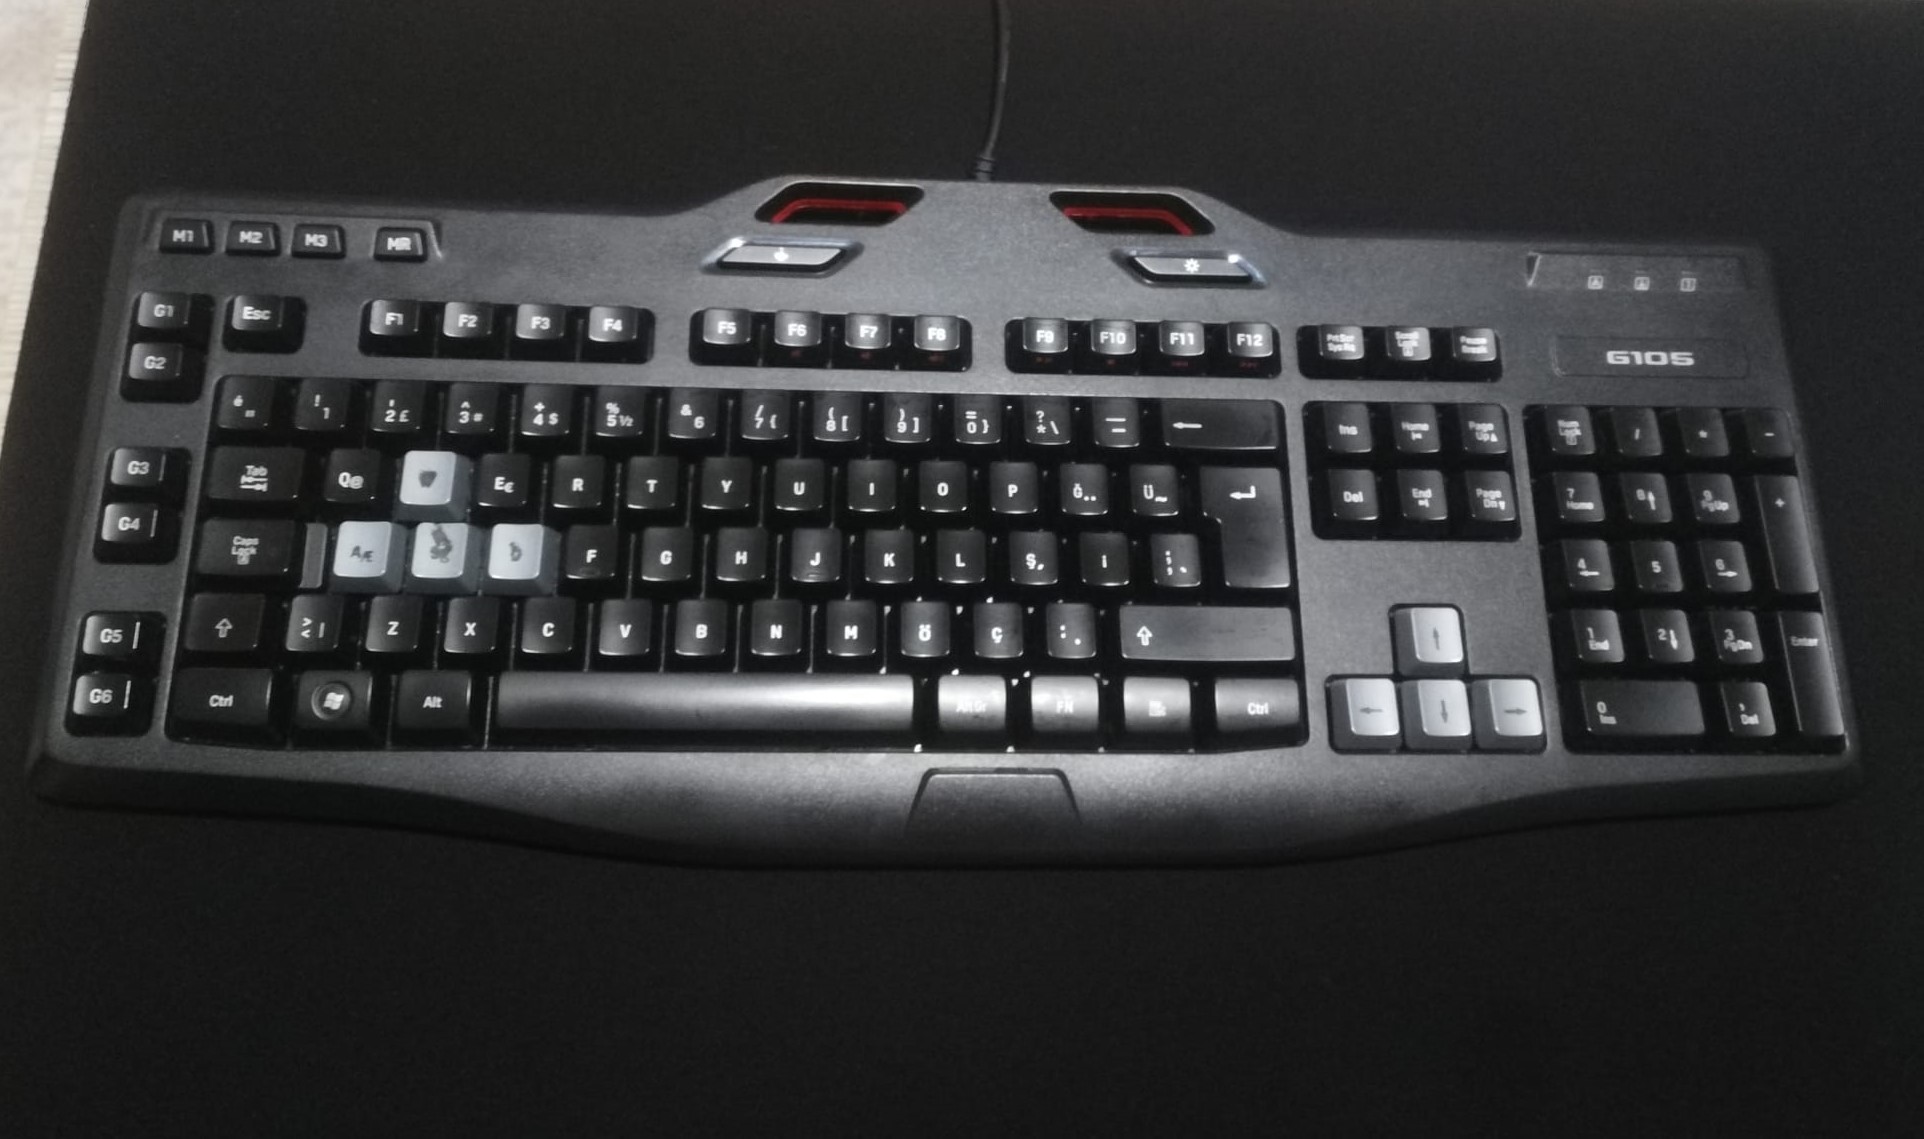 SATILDI] Logitech G105 Gaming Klavye - 100 TL | DonanımHaber Forum